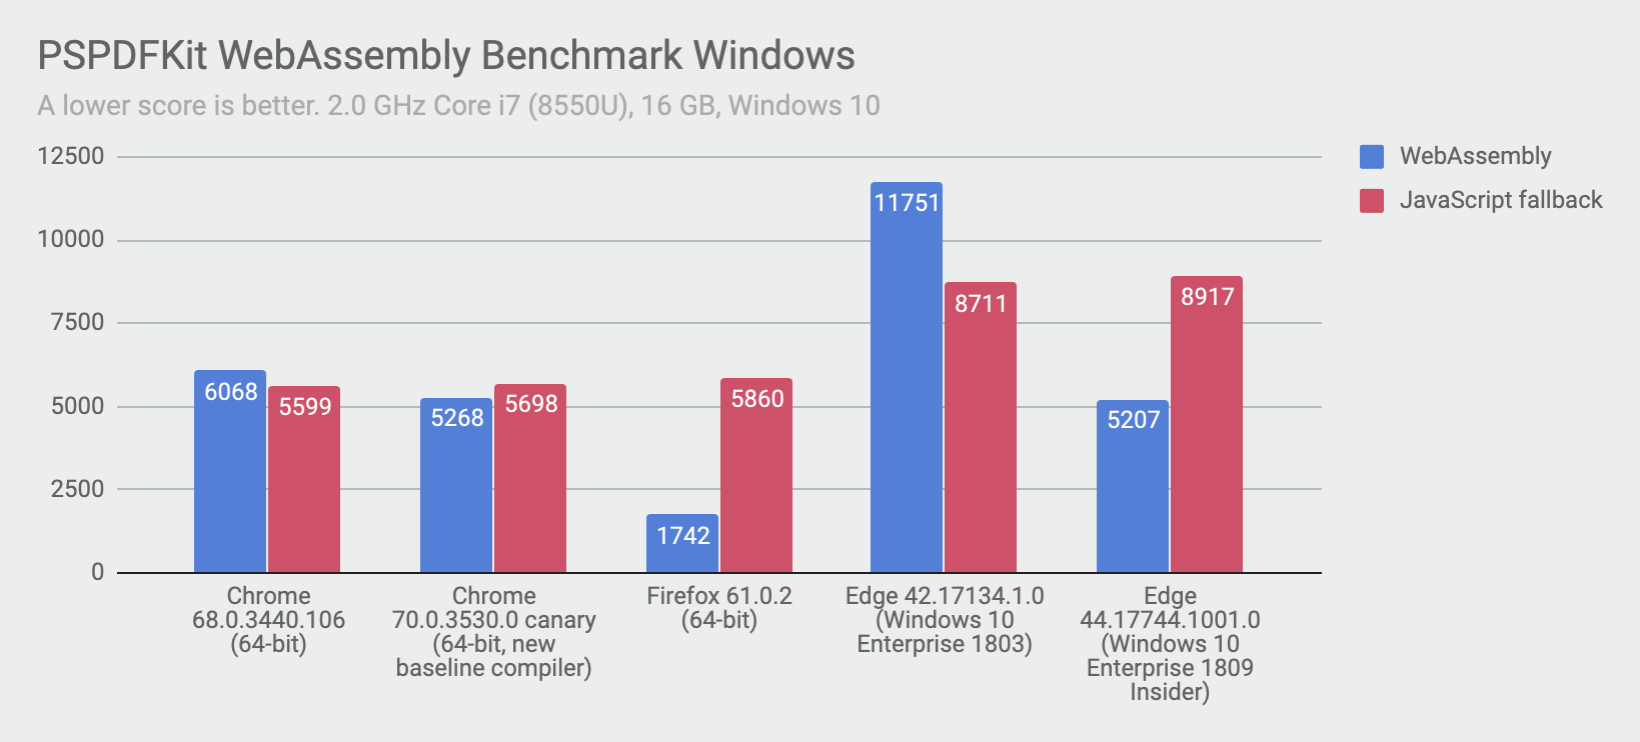 PSPDFKit WebAssembly Score on Windows: Chrome 68.0.3440.106 (64-bit): 6068, Chrome 70.0.3530.0 canary (64-bit, new baseline compiler): 5268, Firefox 61.0.2 (64-bit): 1742, Edge 42.17134.1.0 (Windows 10 Enterprise 1803): 11751, Edge 44.17744.1001.0 (Windows 10 Enterprise 1809 Insider): 5207